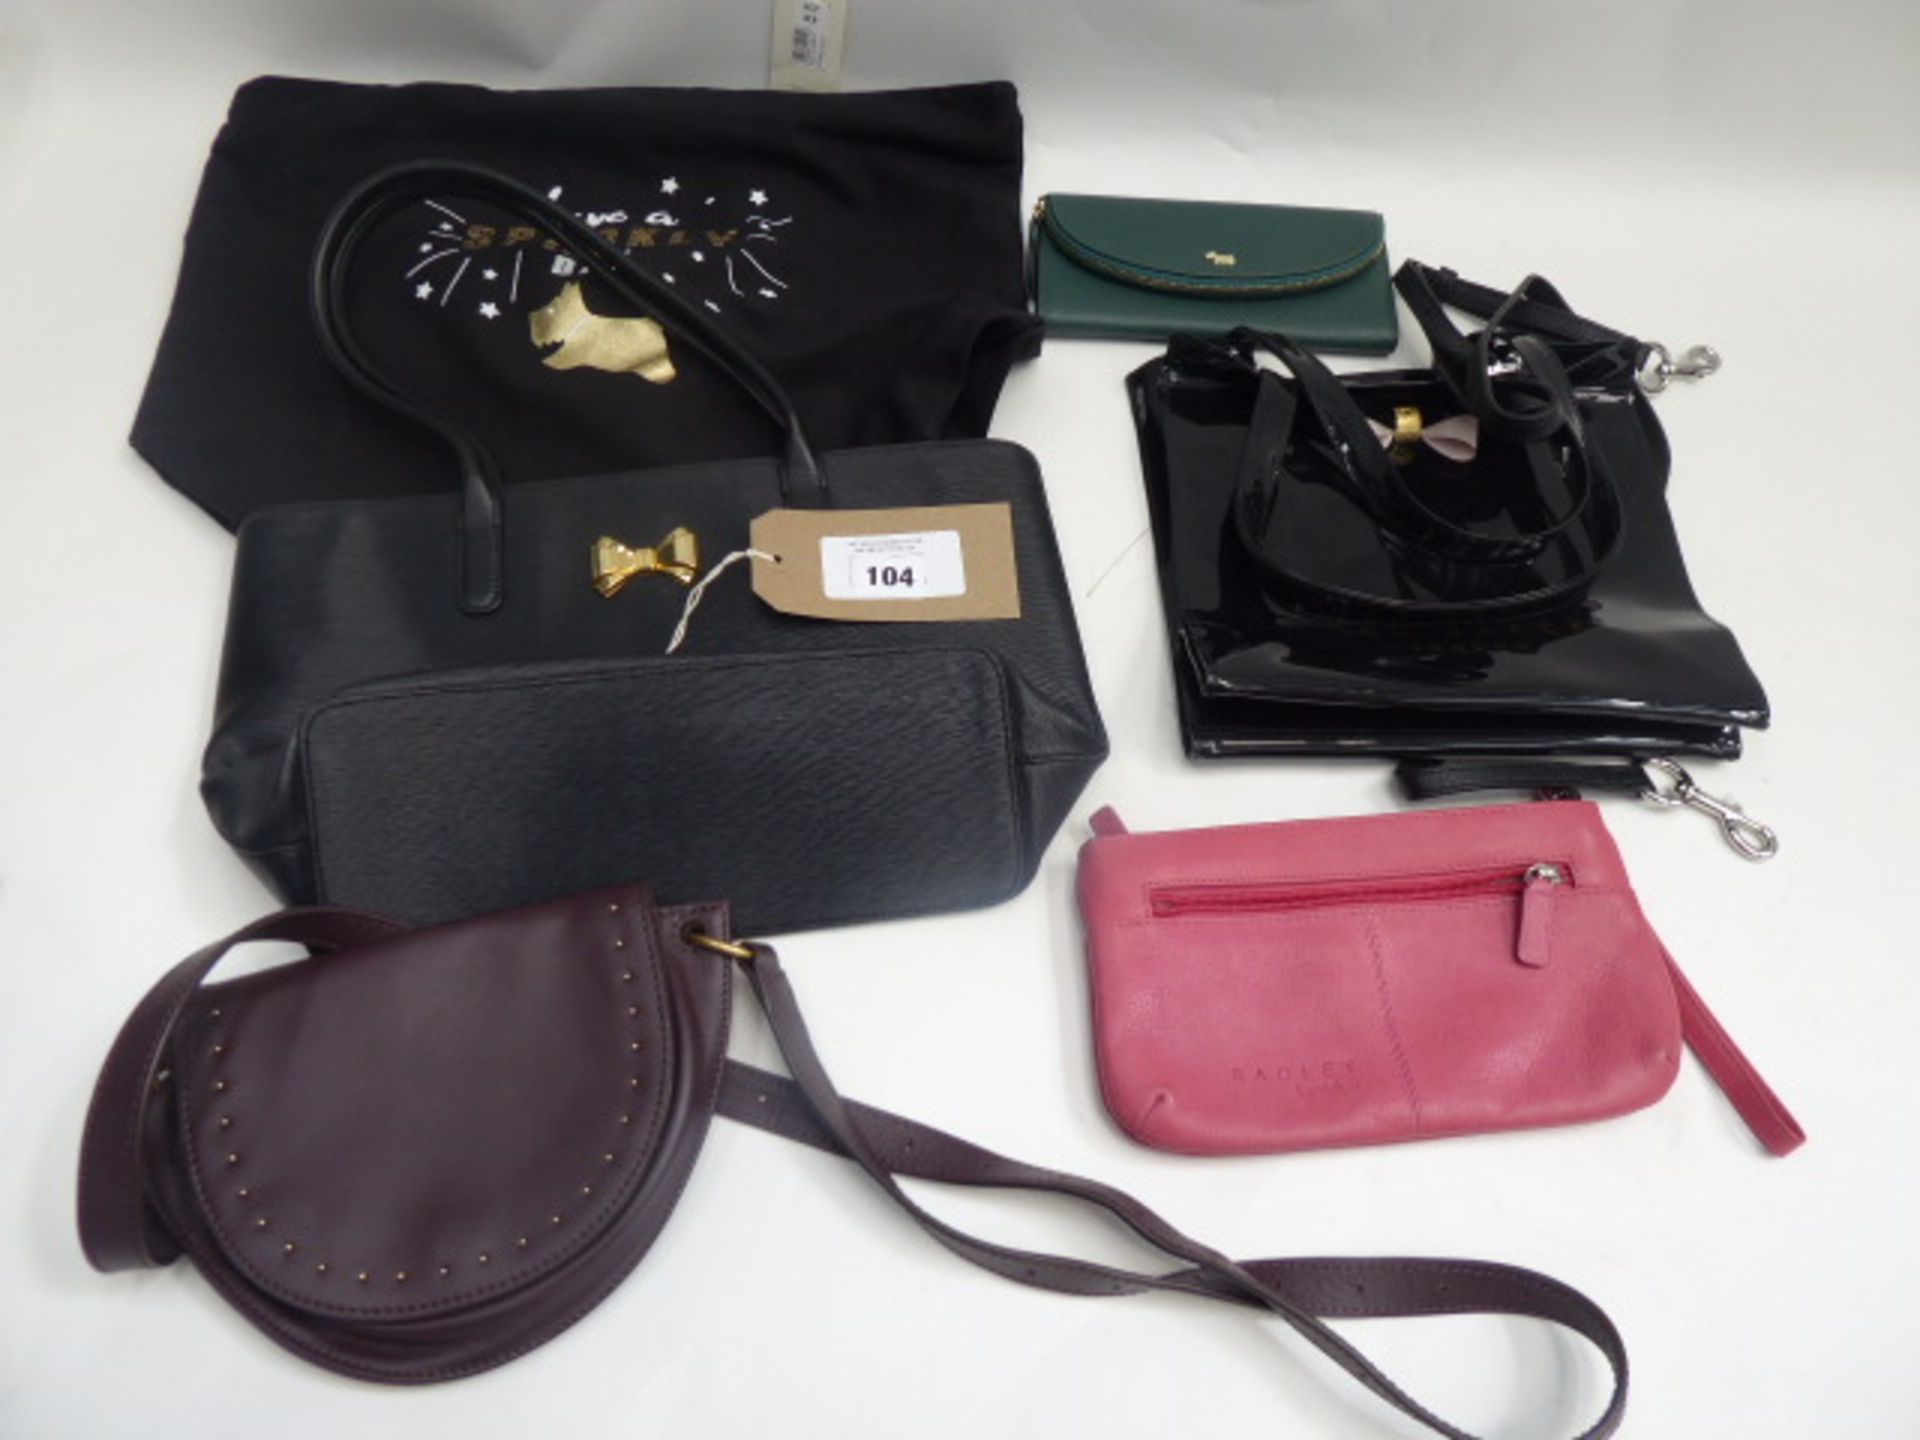 A selection of 6 bags: a small Ted Baker pvc tote bag, a Ted Baker handbag, 2 Radley purses, a